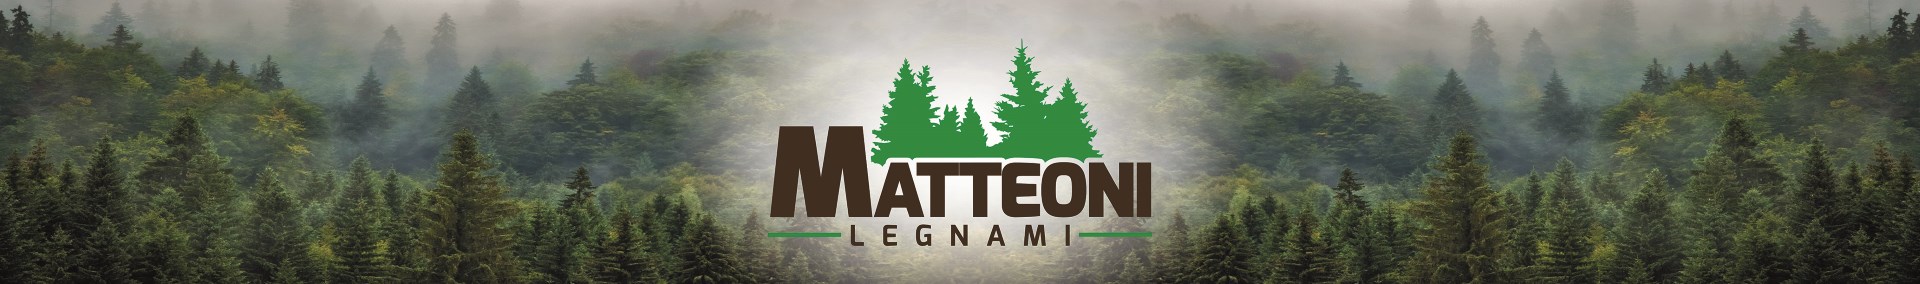 Matteoni Legnami